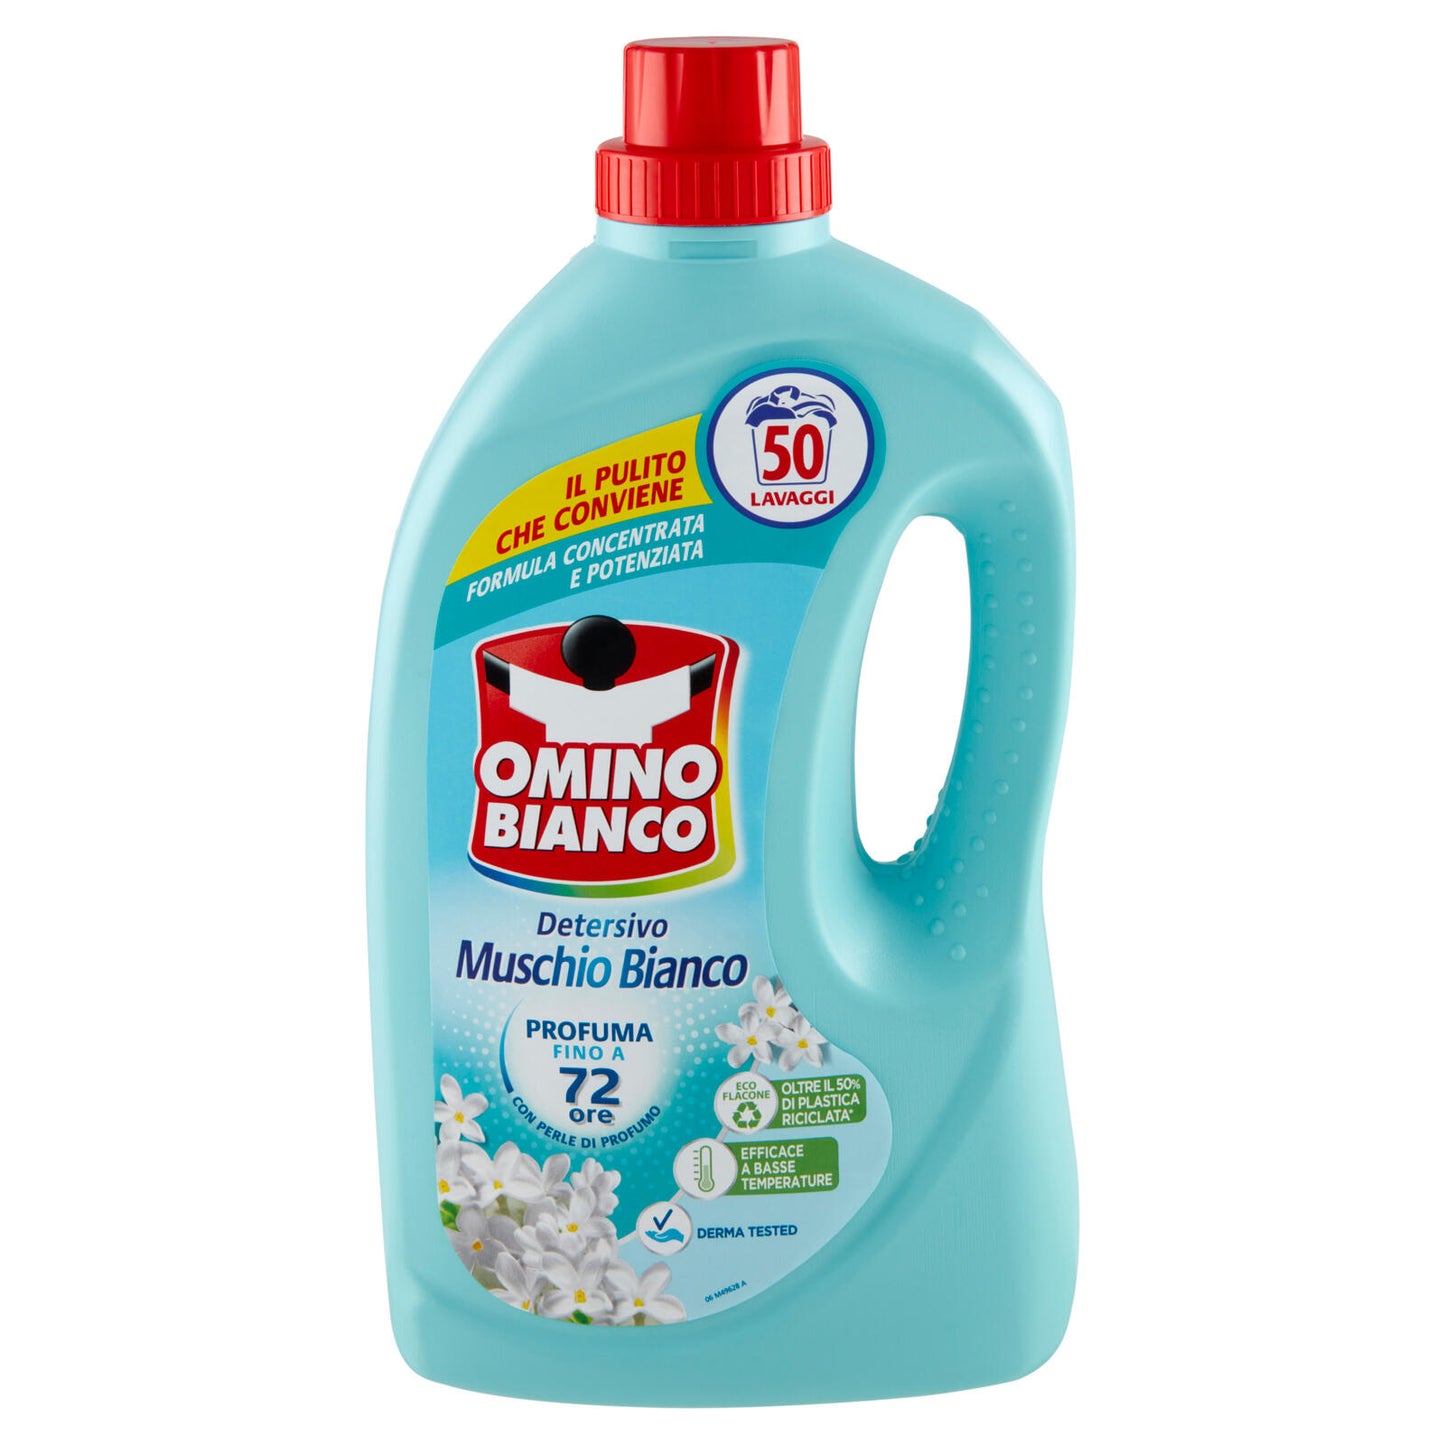 Omino Bianco Detersivo Lavatrice Liquido Muschio Bianco 50 Lavaggi 2000 ml